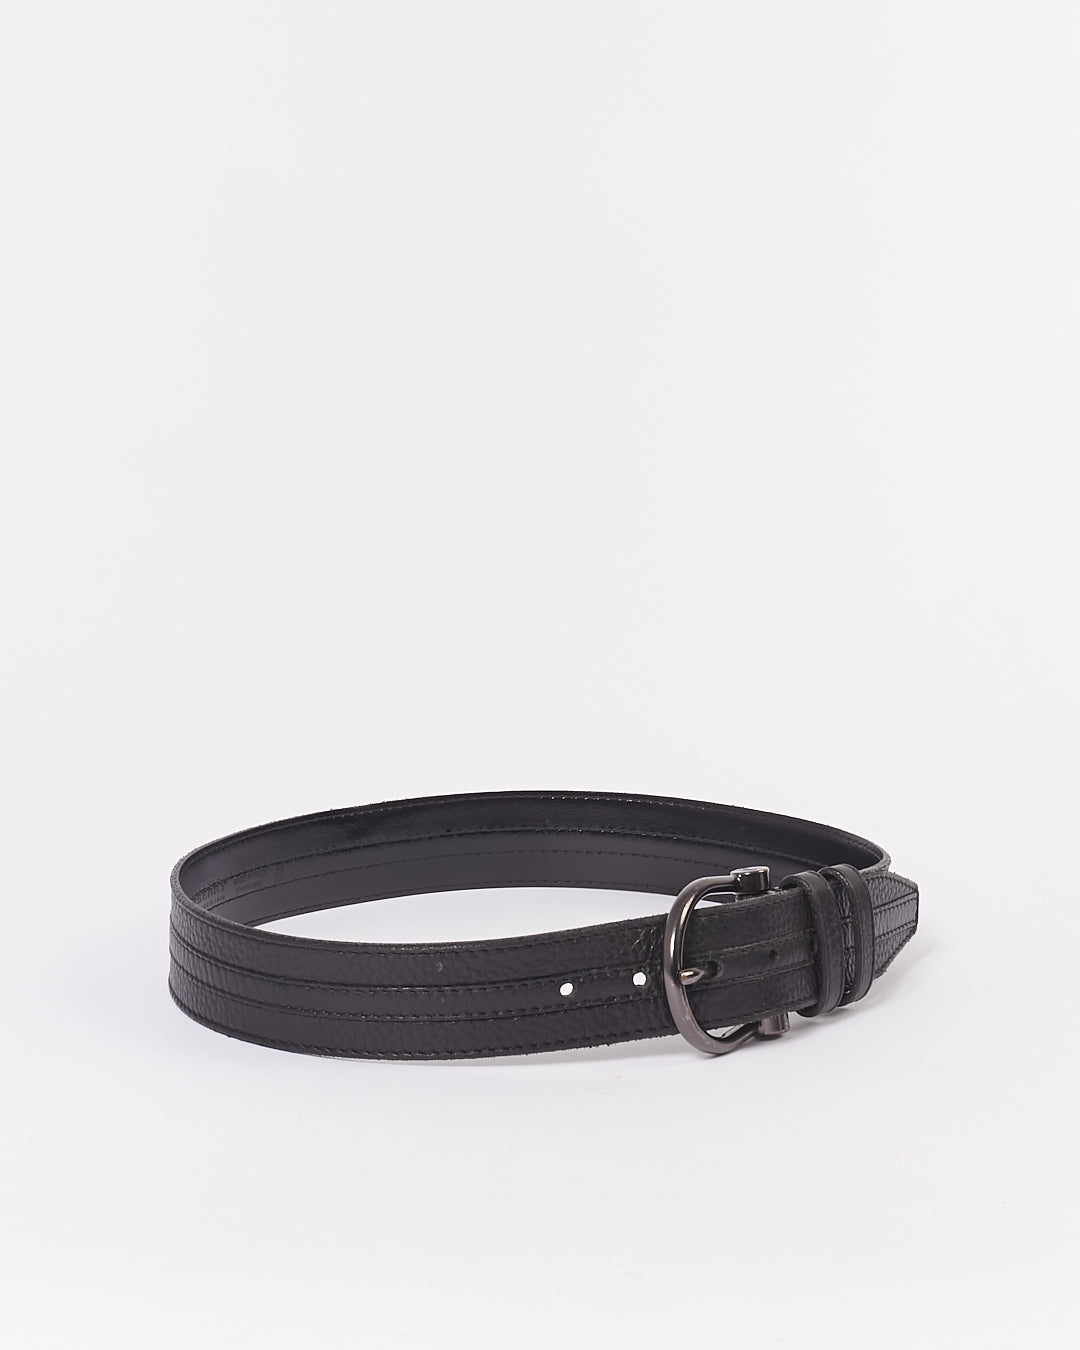 Burberry Black Leather Buckle Belt - 32/80